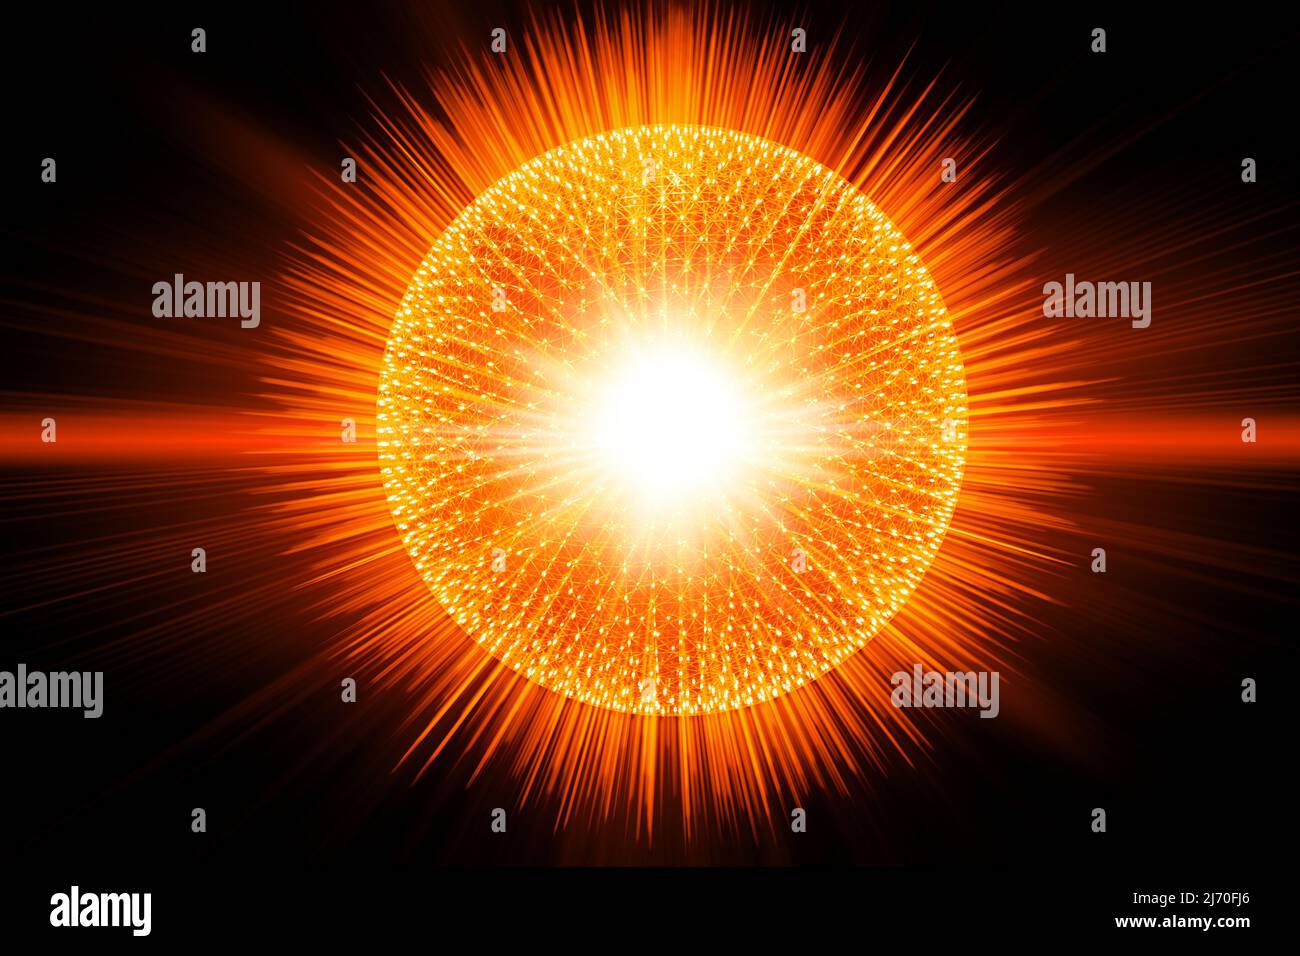 3D illustration Atom nucleus explosive break apart release energy and radiation light science illustration concept. Stock Photo